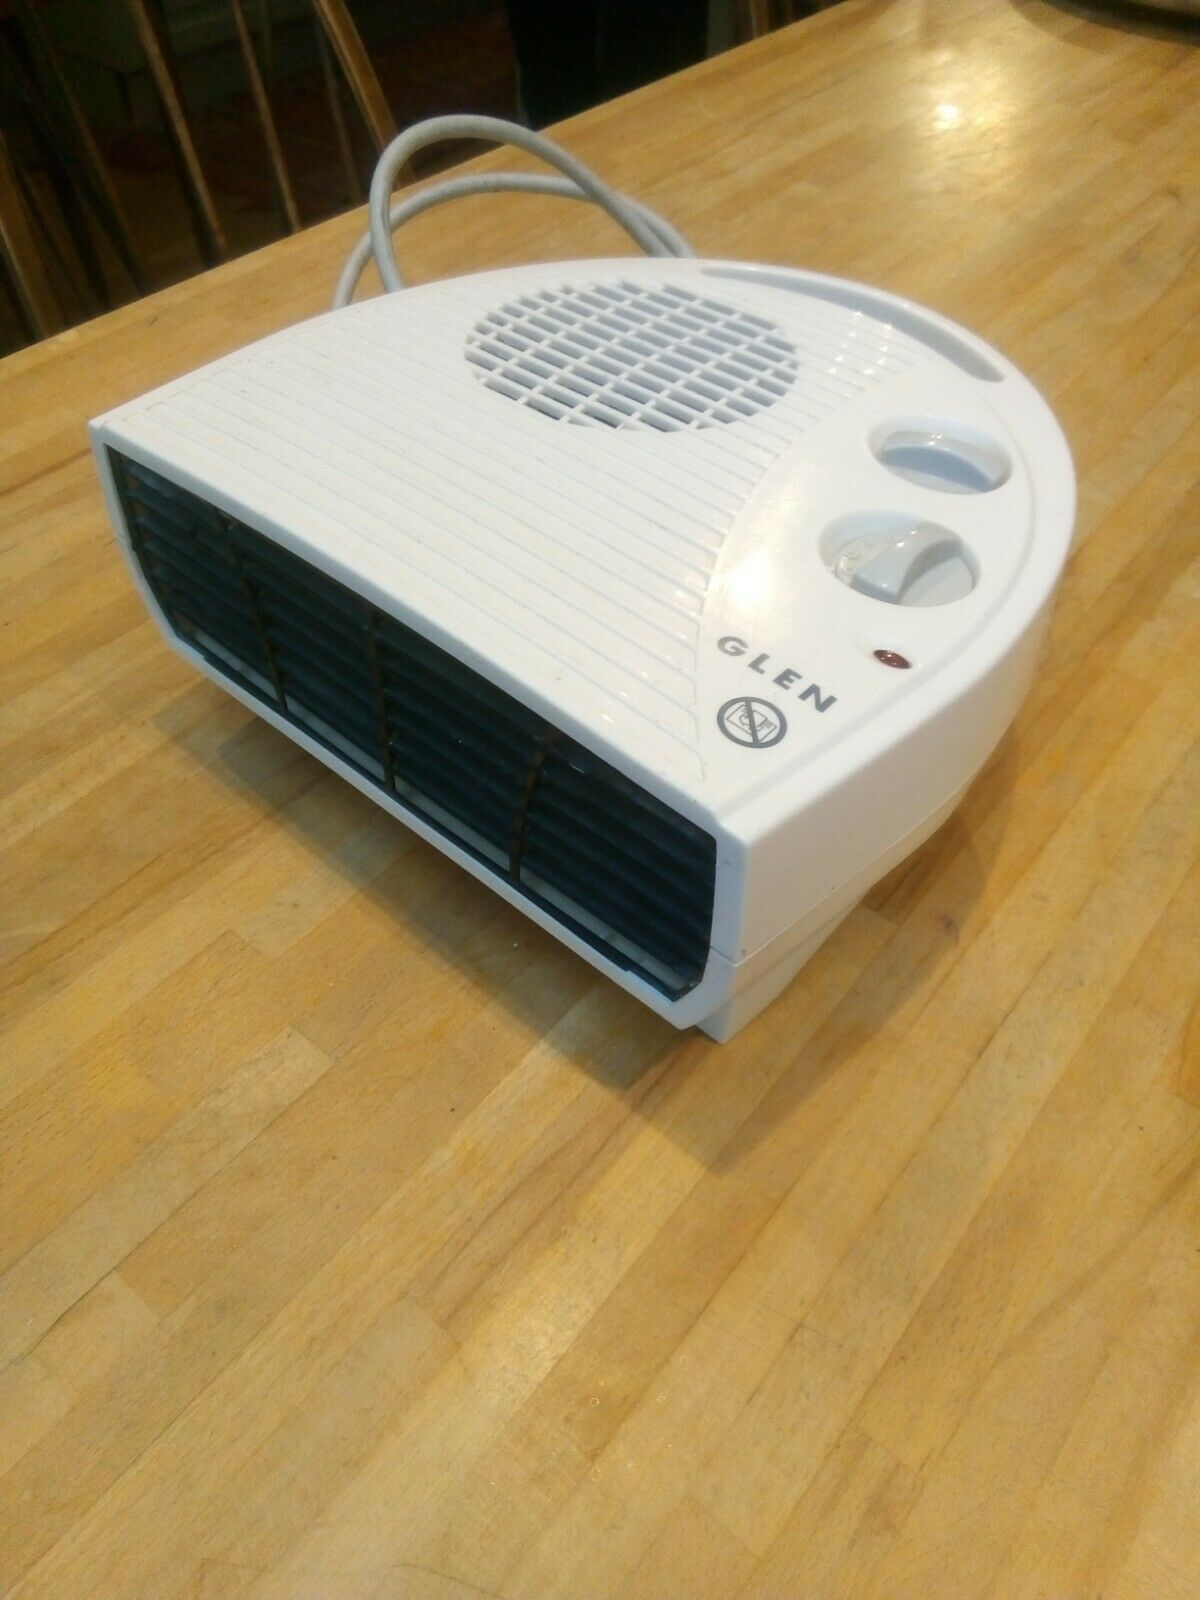 Glen Dimplex Gf30tsn 3kw Portable Flat Thermostat Electric Fan Heater throughout proportions 1200 X 1600